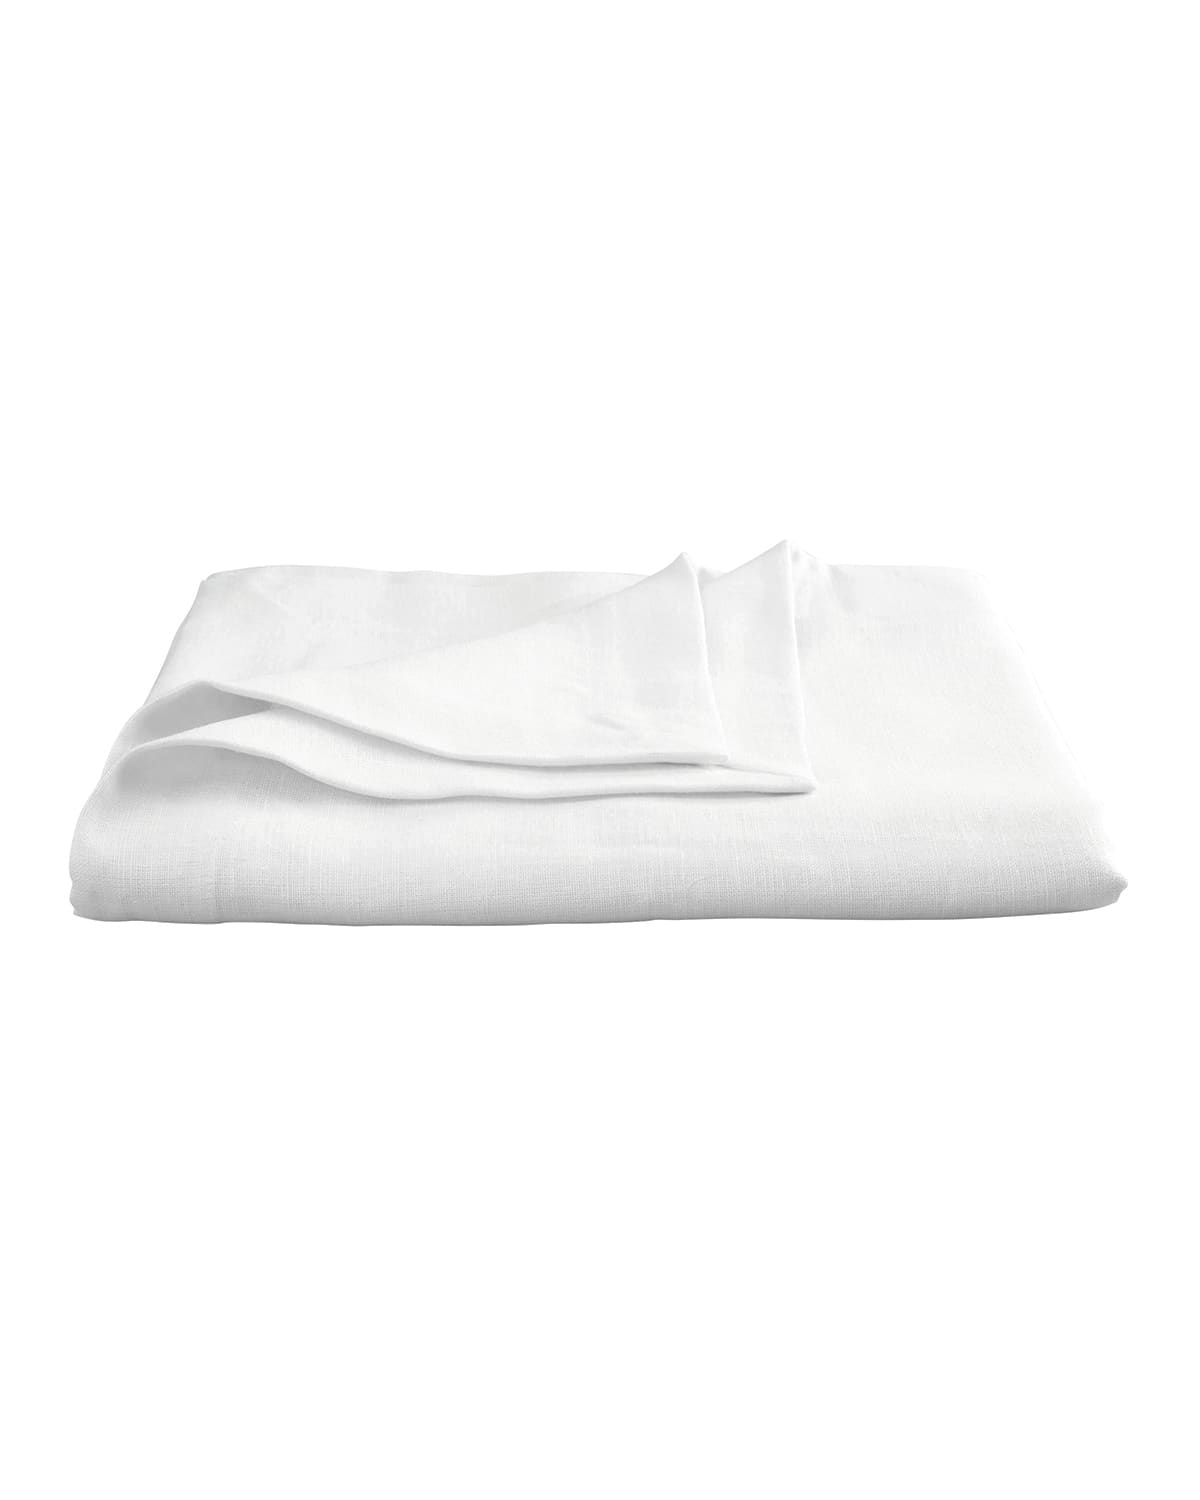 Matouk Chamant Tablecloth, 90"dia. In White